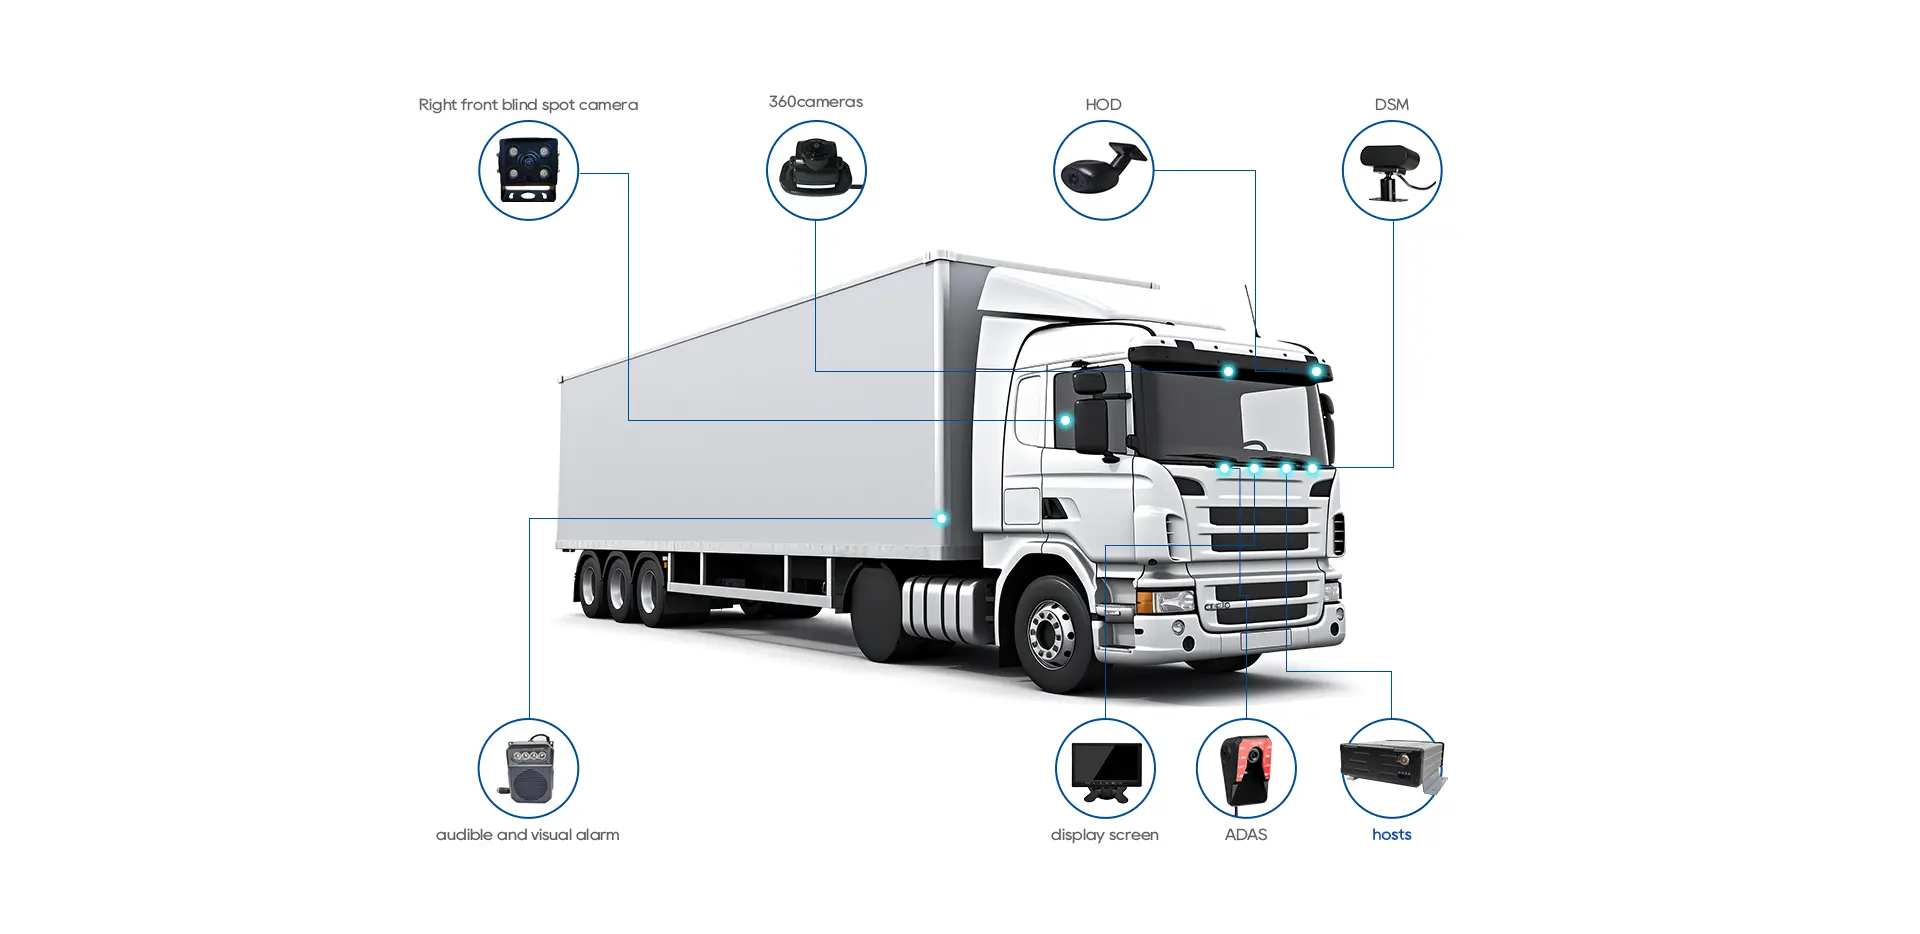 Configuration diagram Blind spot camera for semi trucks